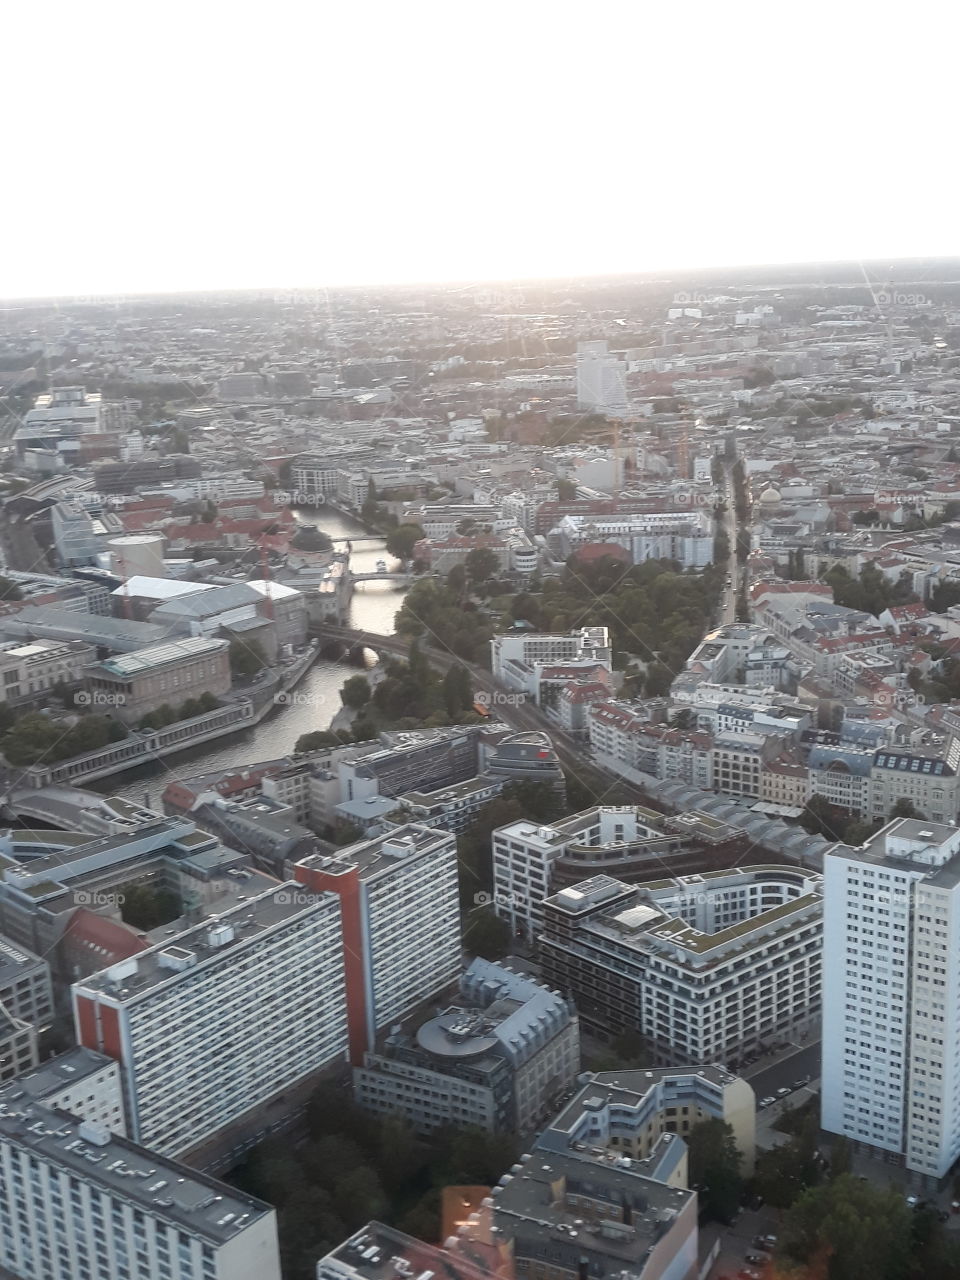 sight on part of Berlin